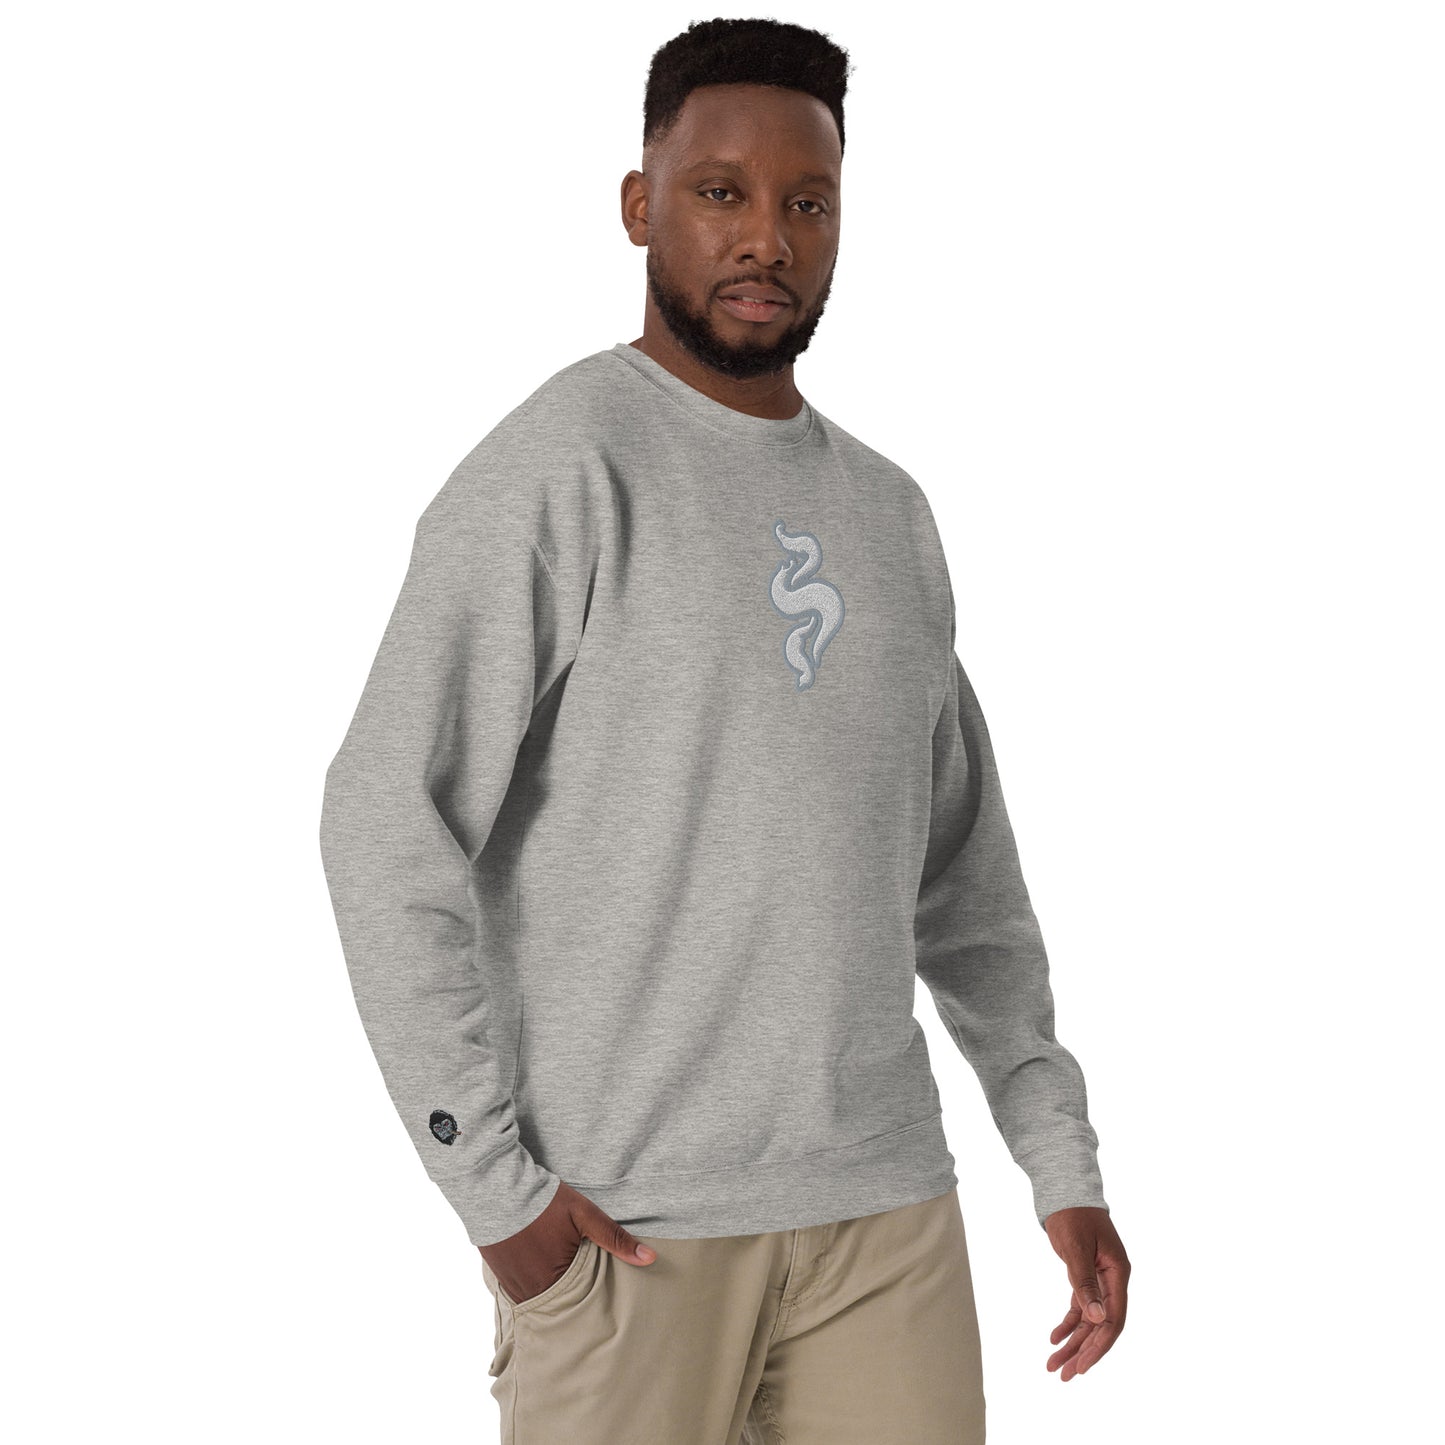 BigSmoke Soprano Clothing: BS Premium Sweatshirt